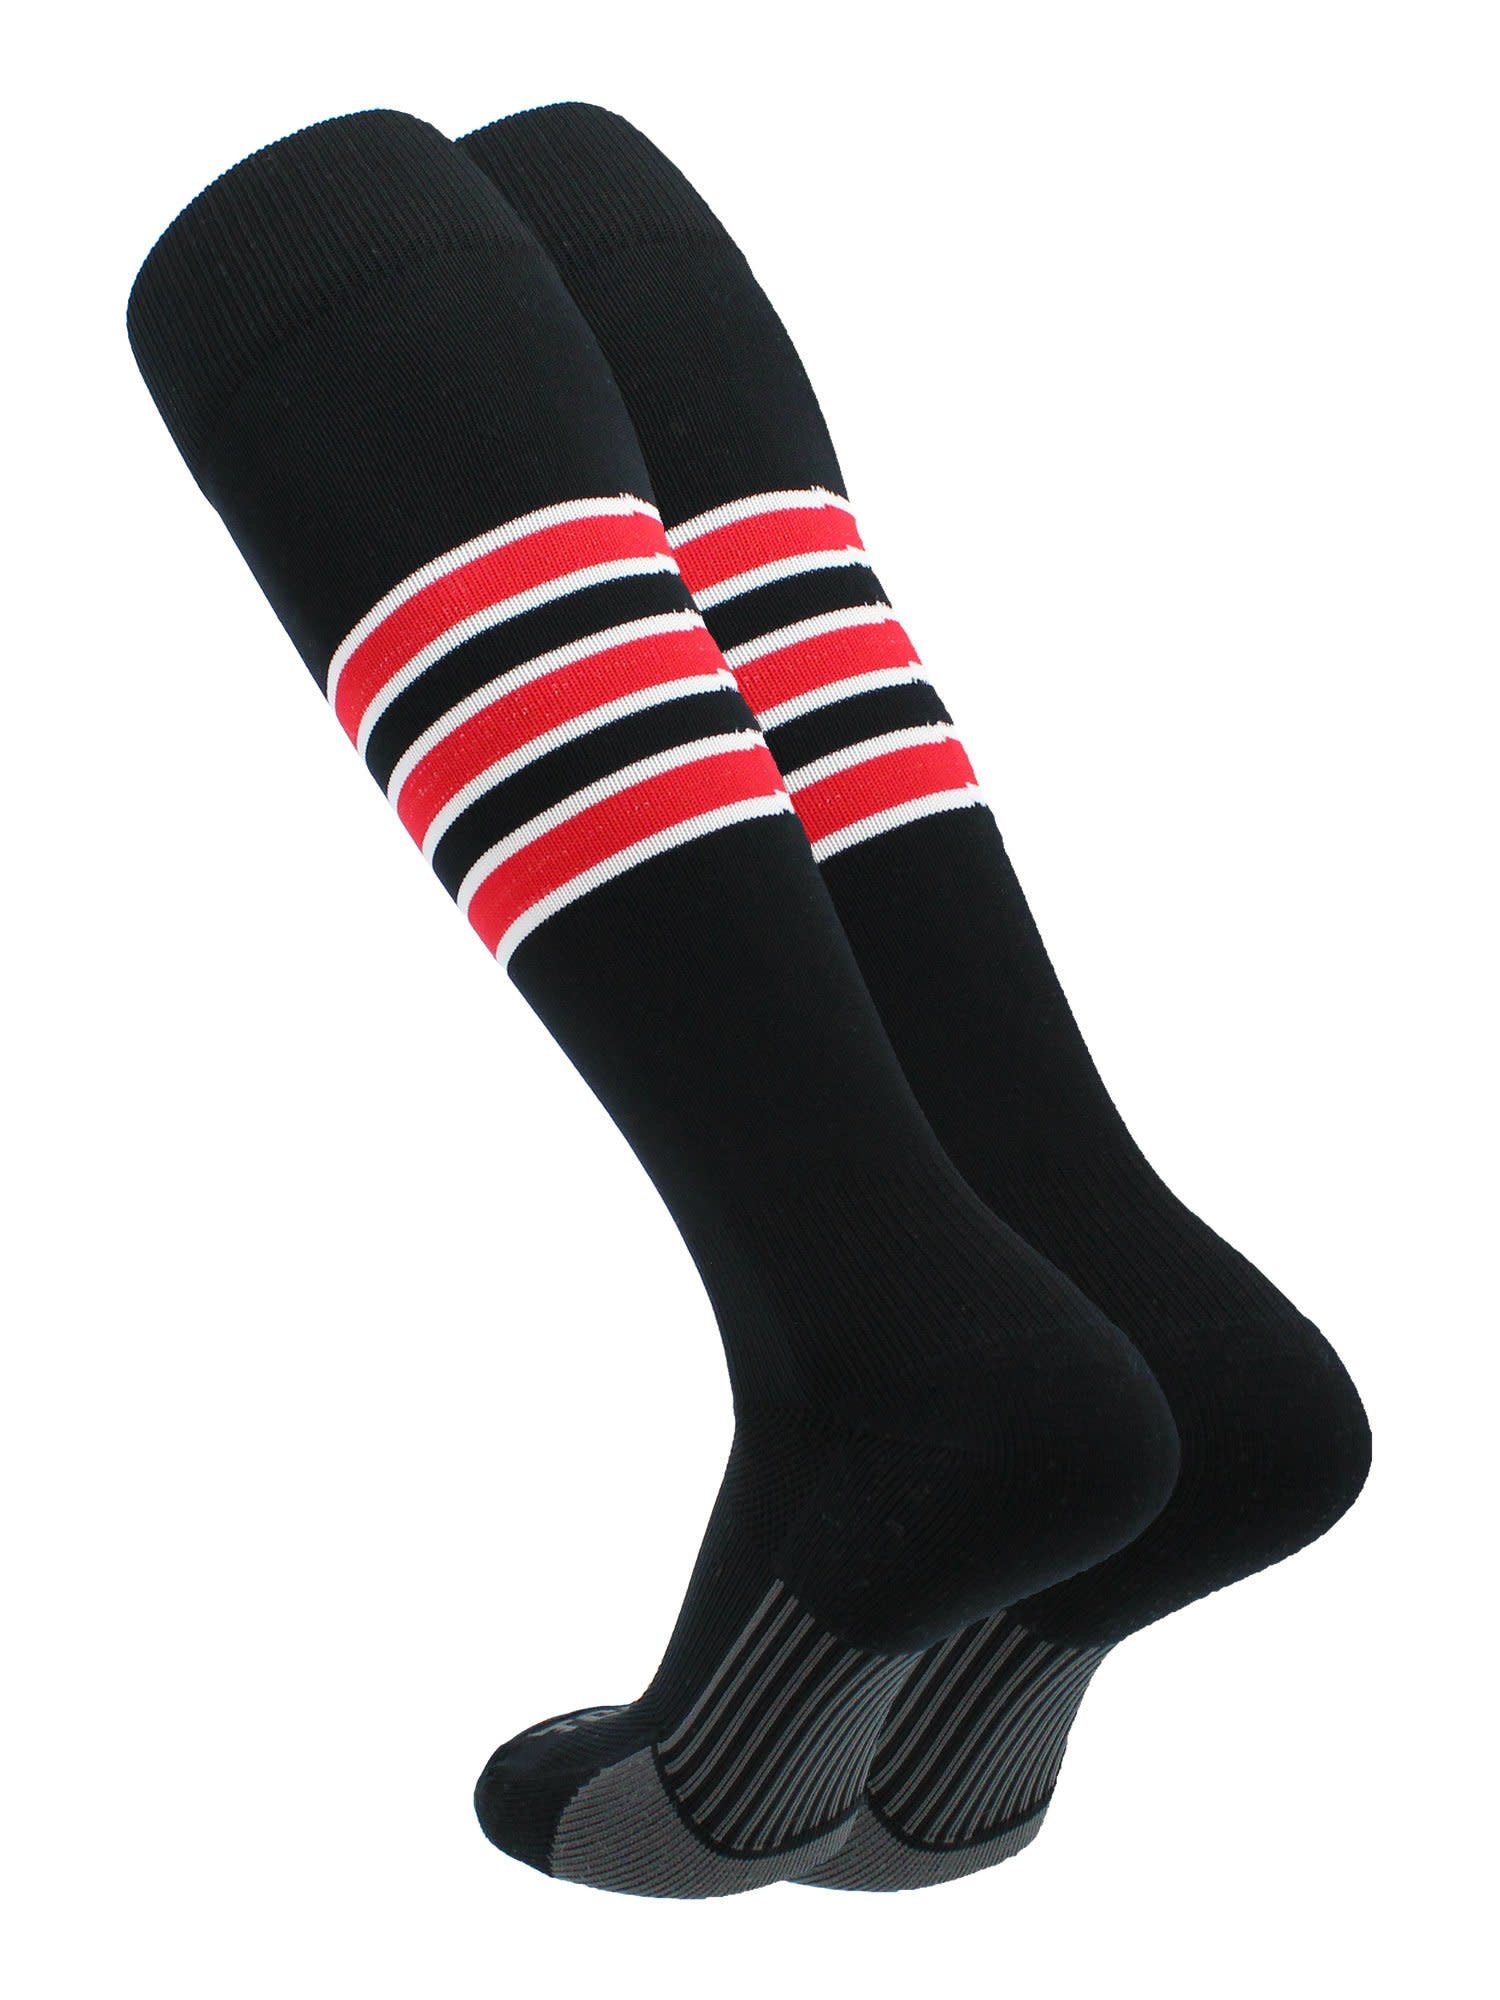 TCK Performance Socks - Dugout Series Pattern D - Black/White/Scarlet ...